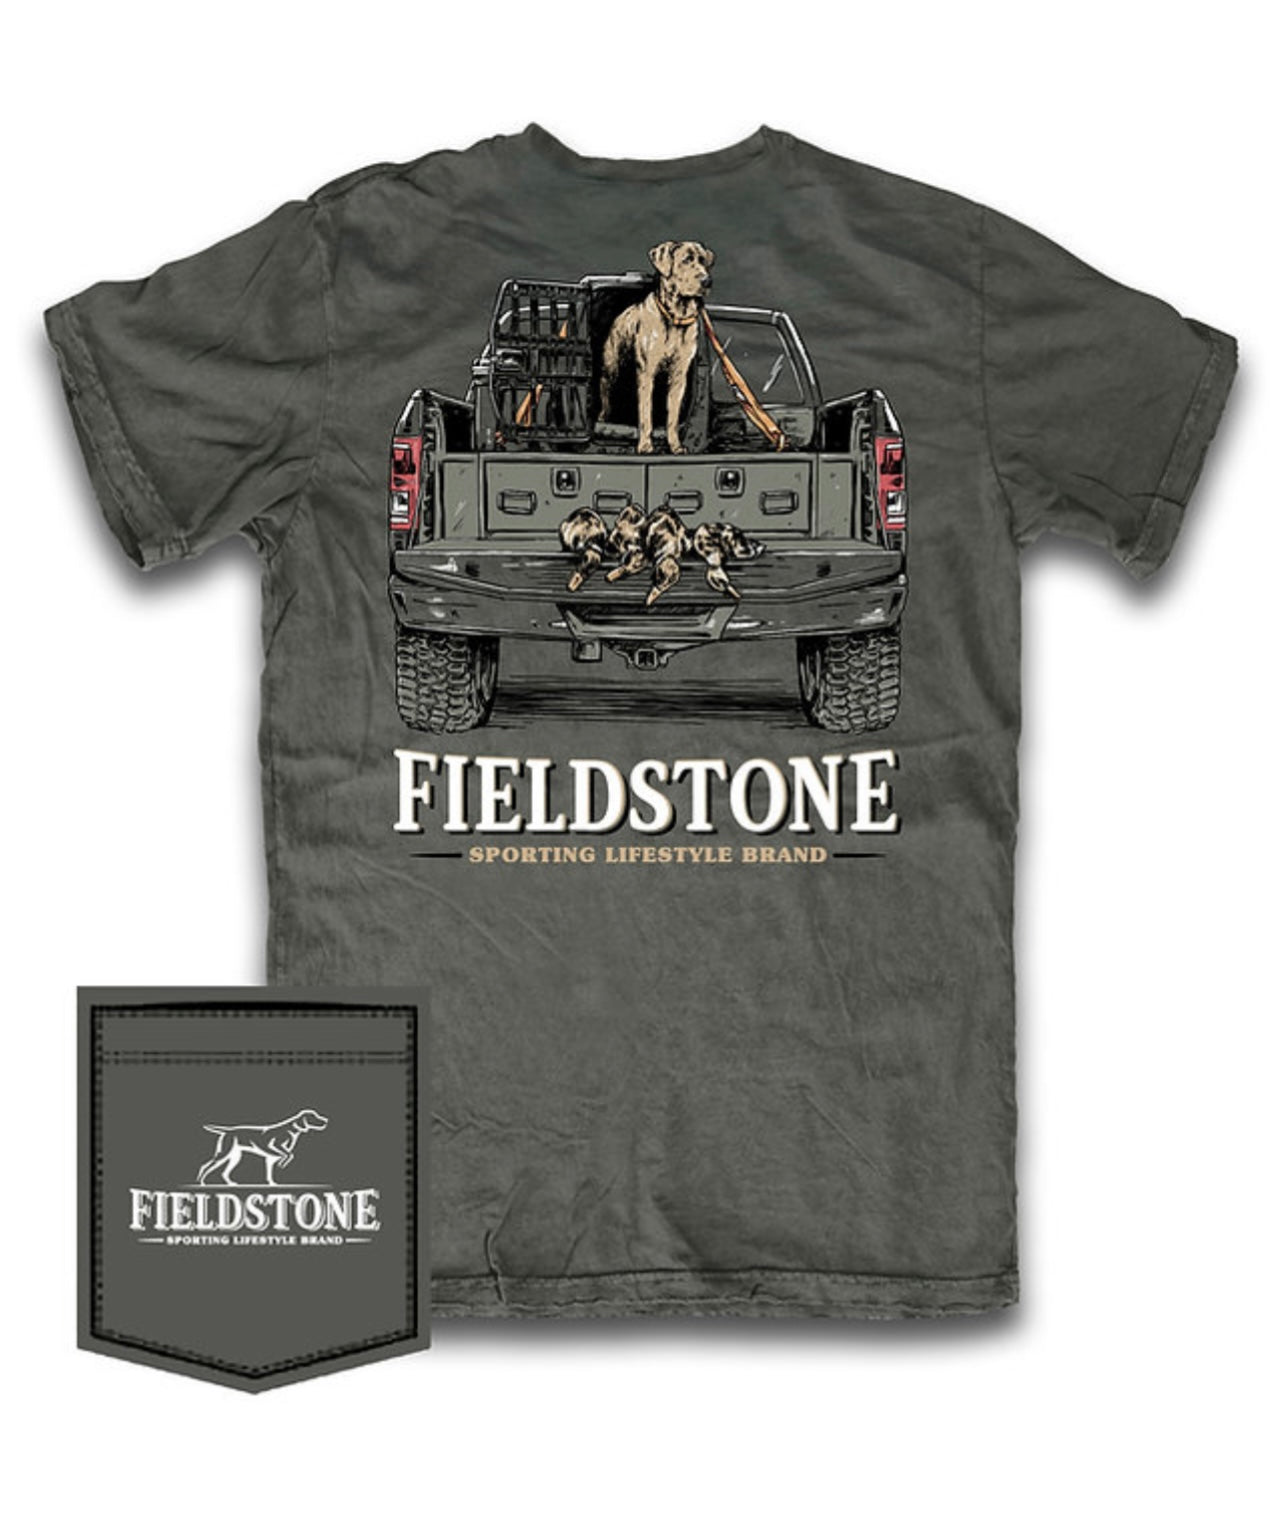 Fieldstone truck bed tshirt